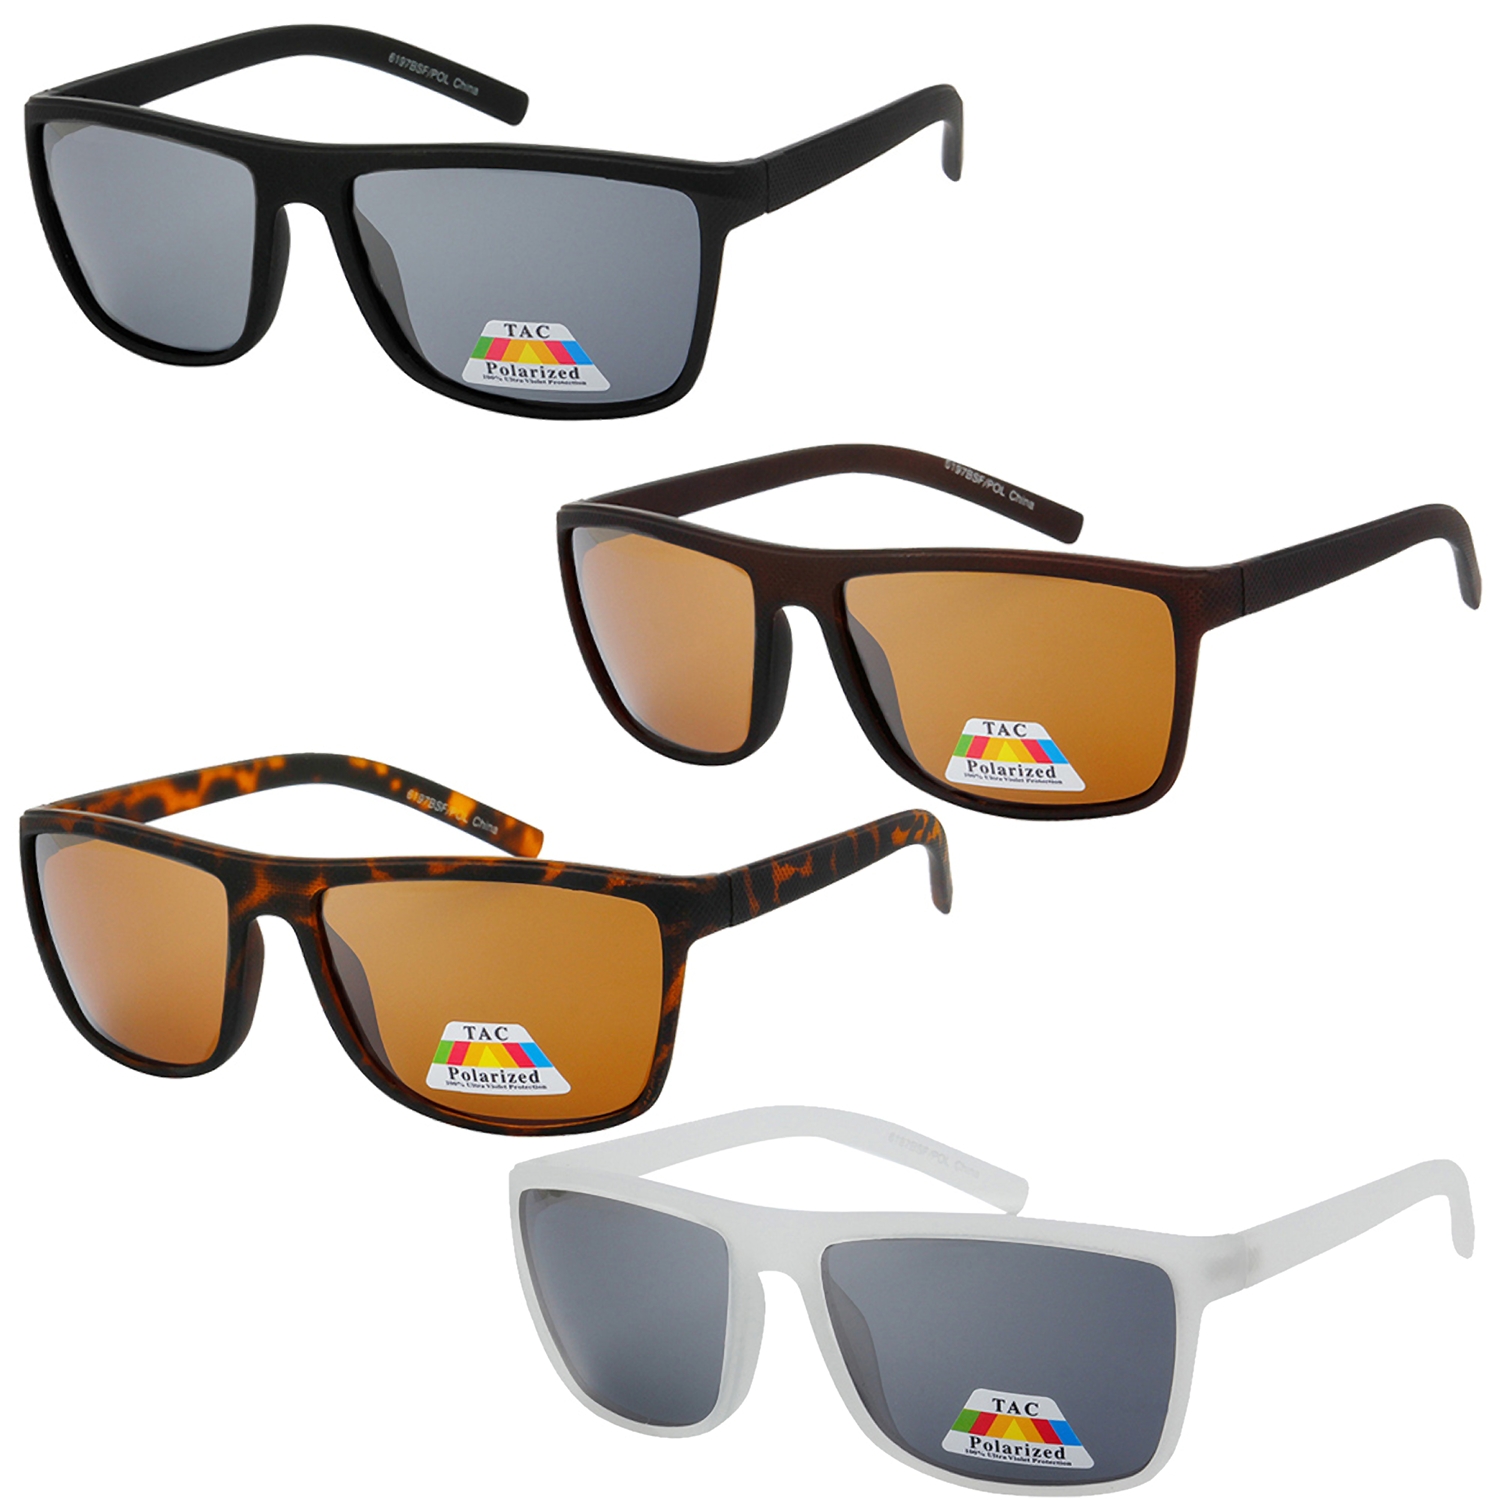 Men's Model 197 Designer Fashion Polarized Sunglasses - image 1 of 3